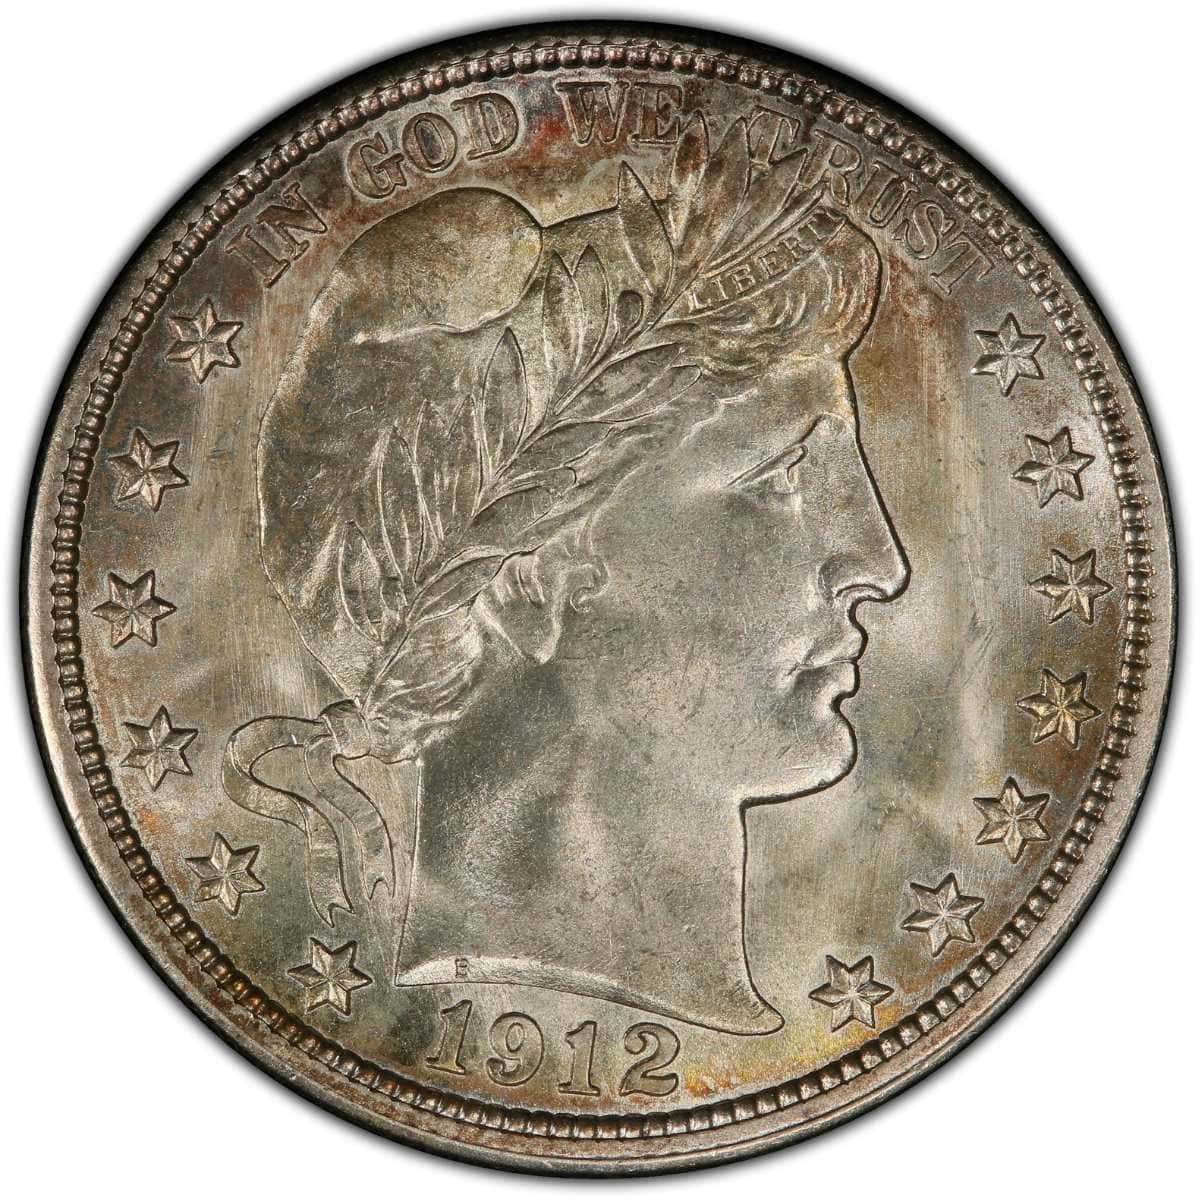 1912 Half Dollar Historical Background